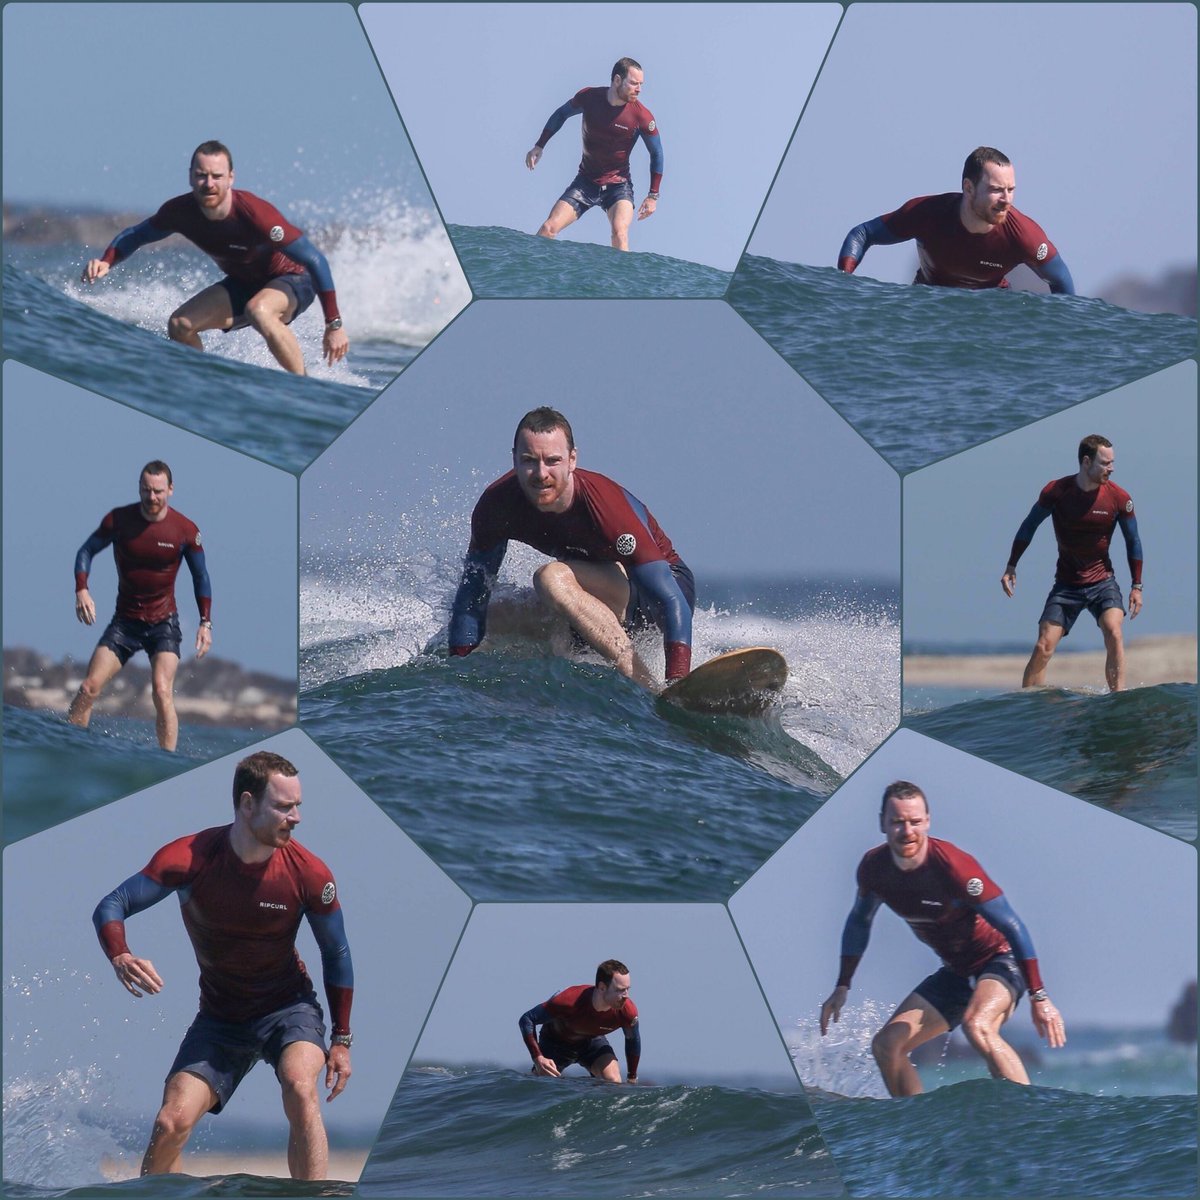 This guy 🤤
#MichaelFassbender #surf #puntademita #Nayarit #RipCurlPro #FirewireSurfboards